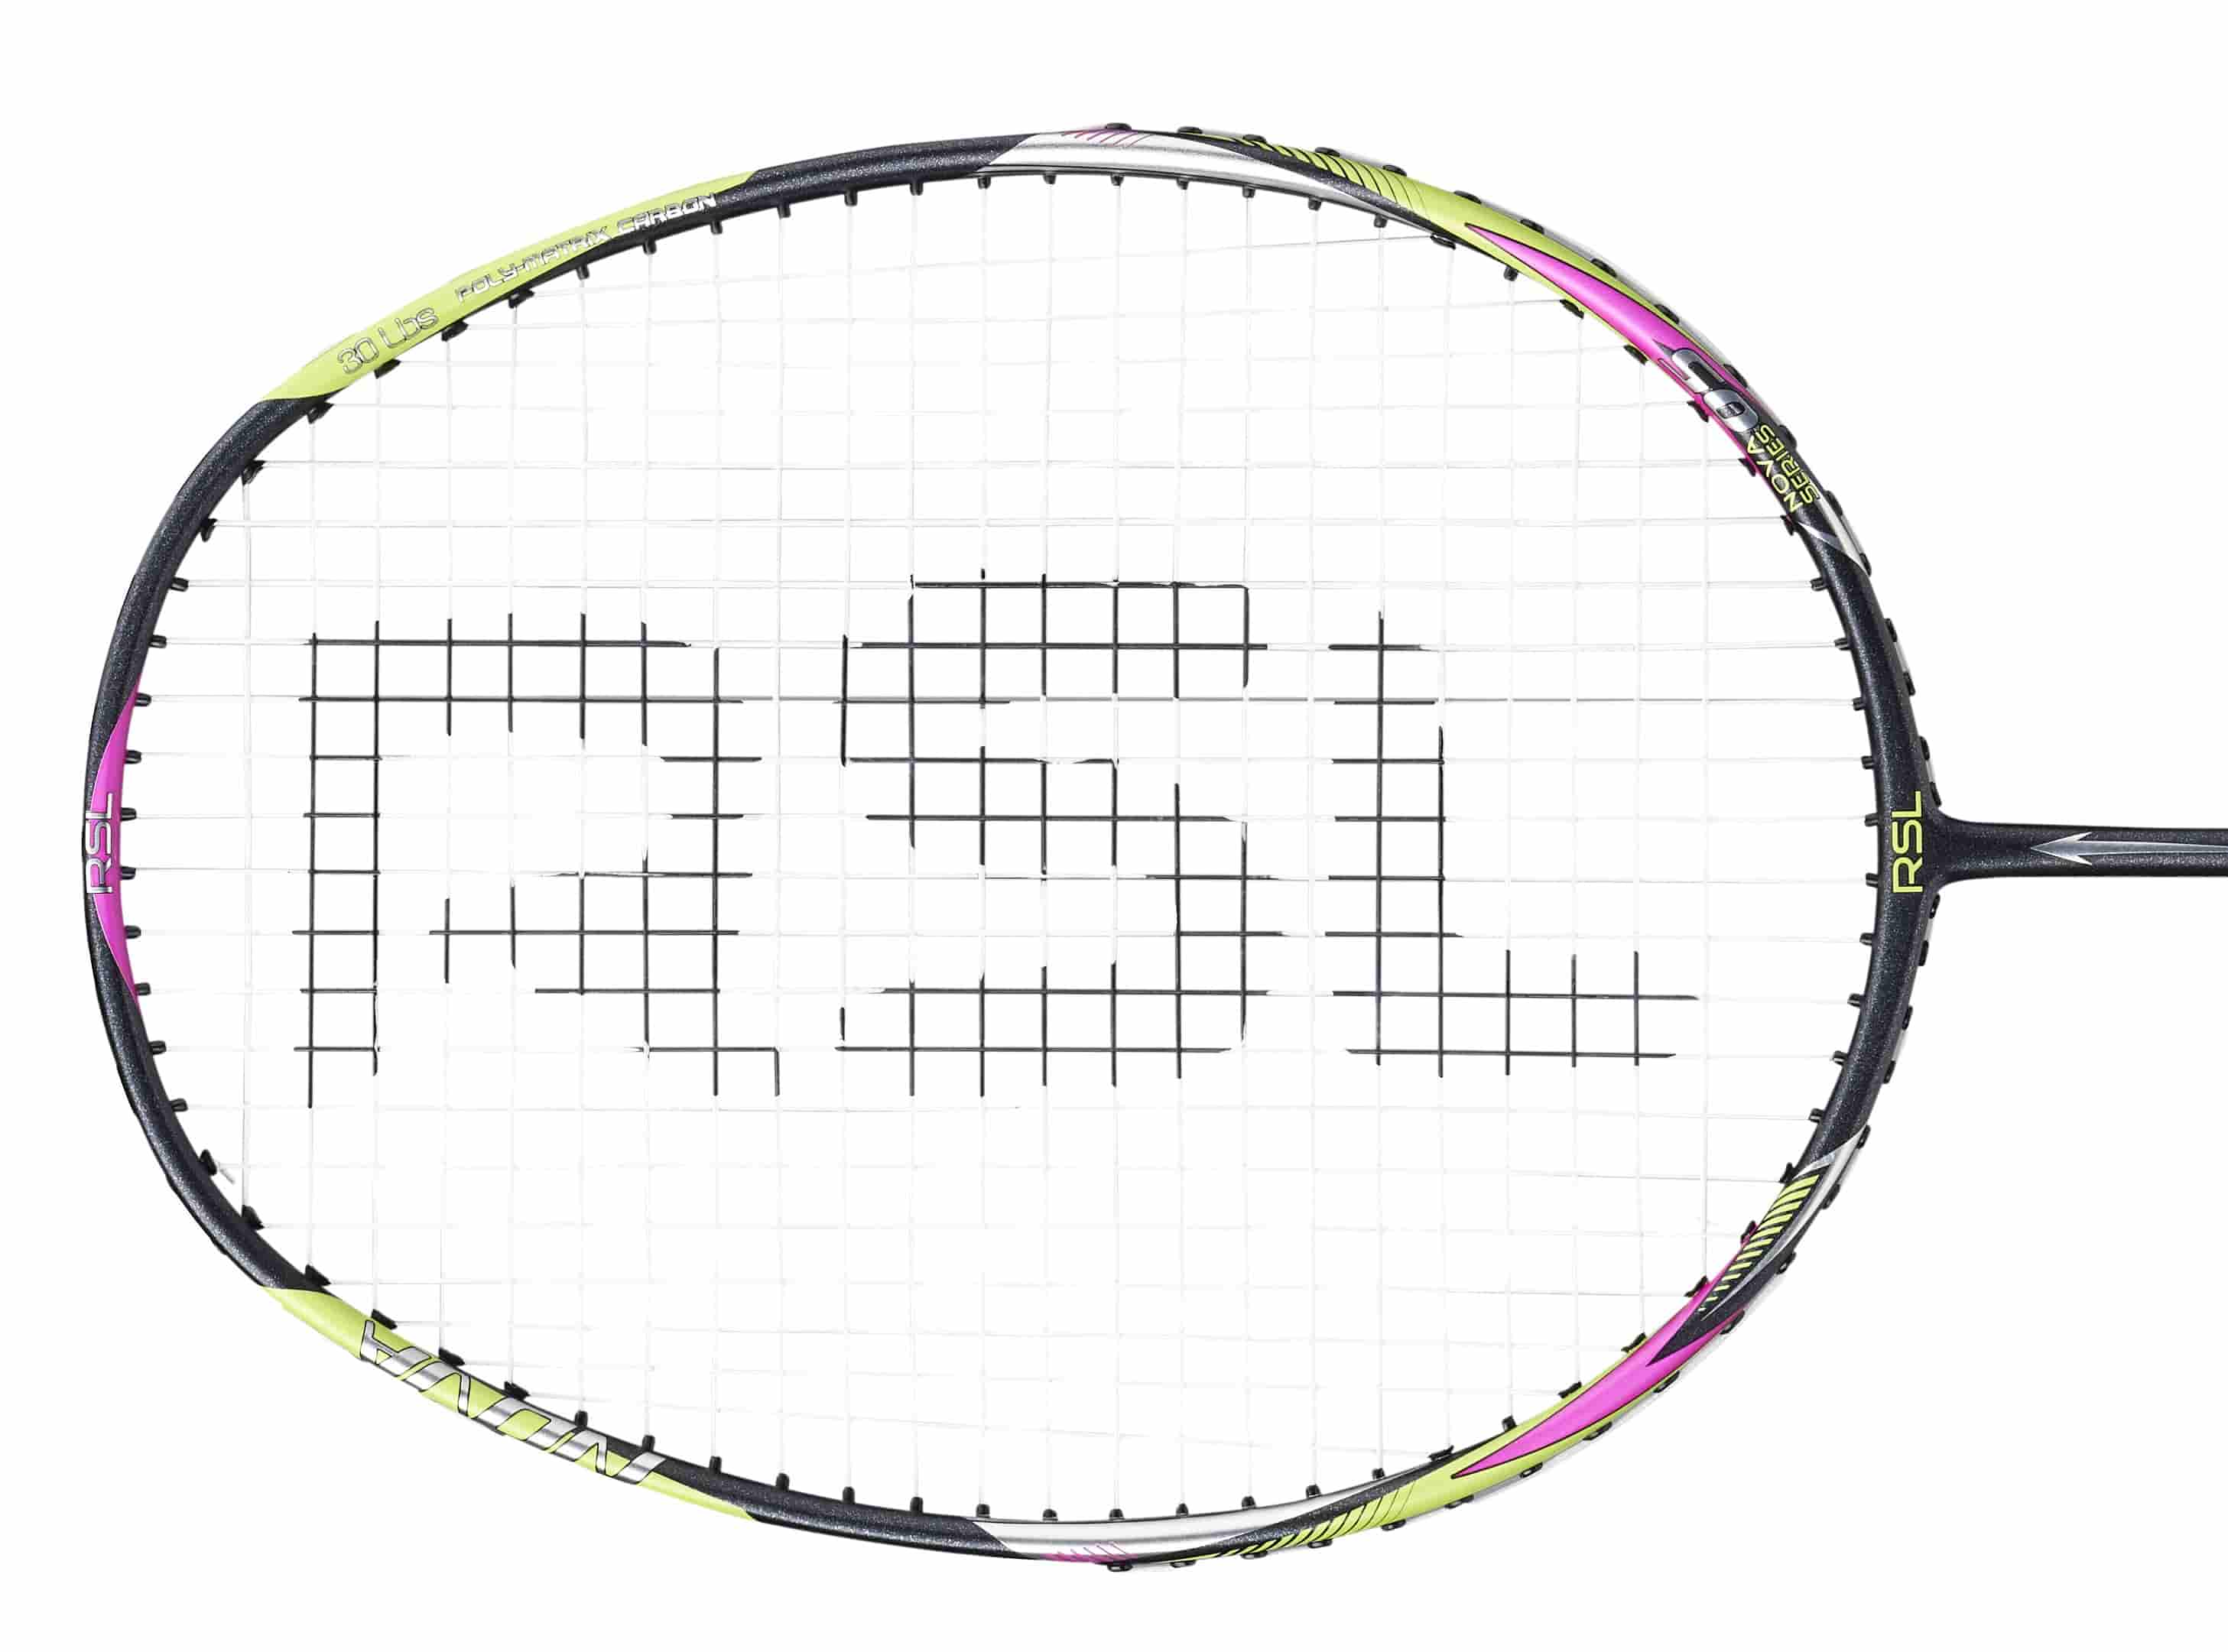 RSL Nova 05 Badmintonschläger - Besaitet